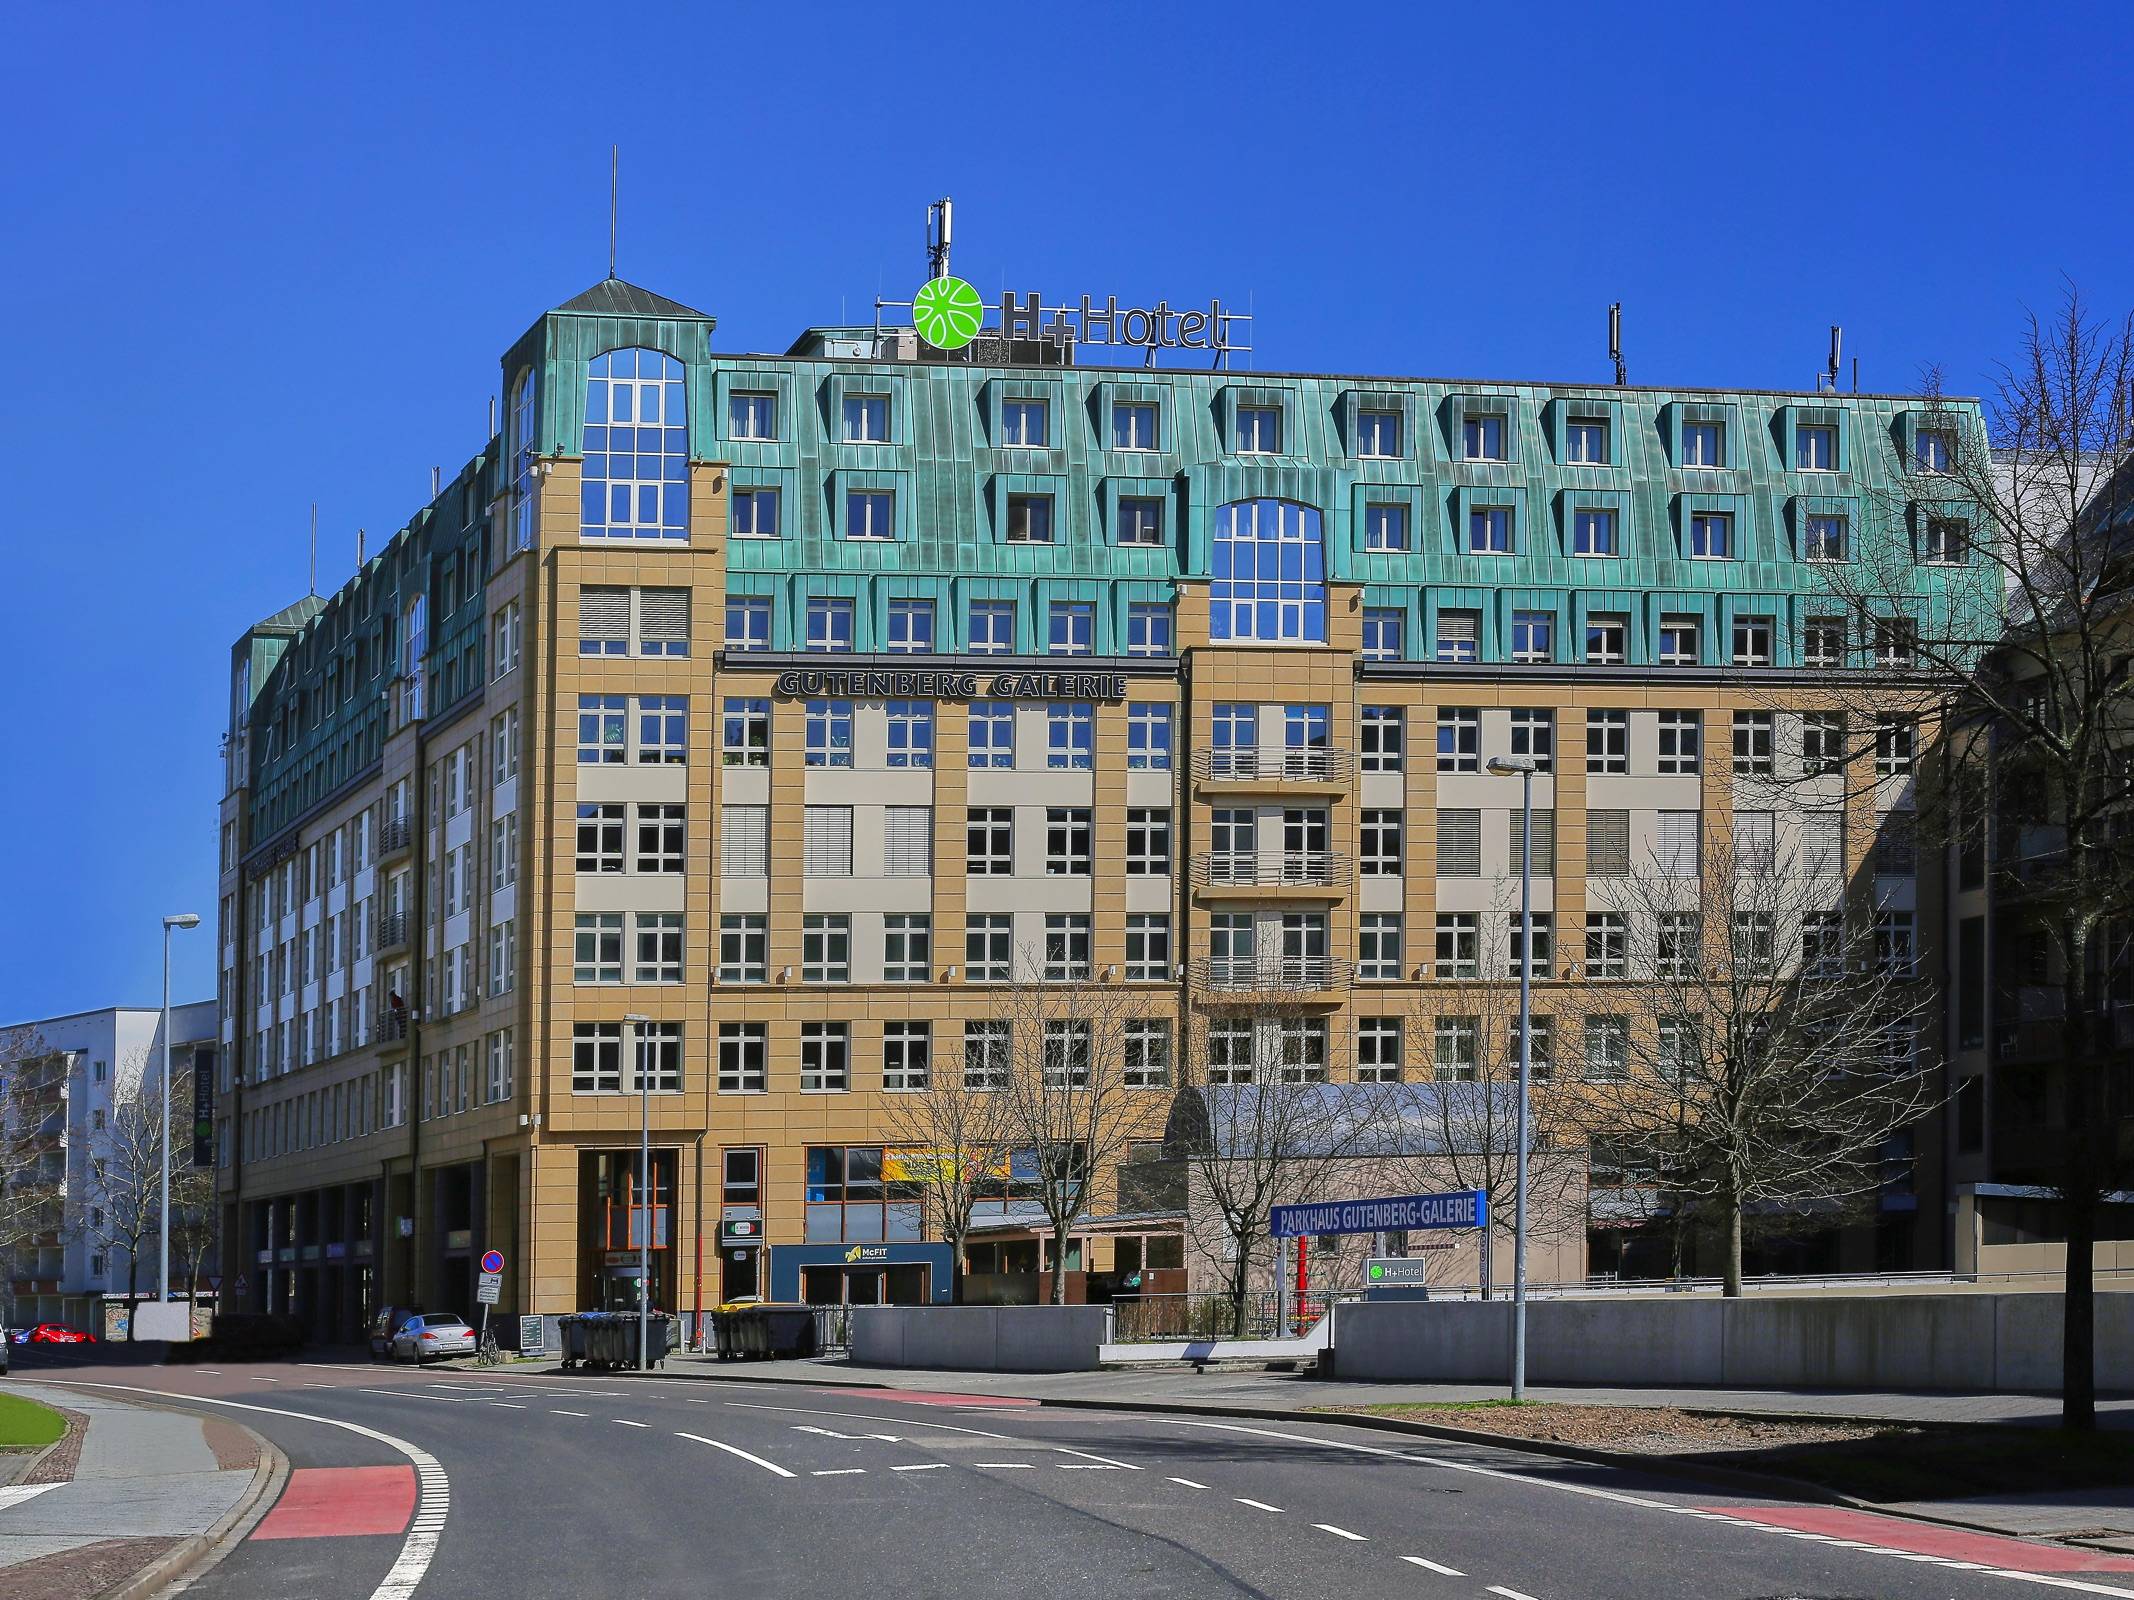 H+ Hotel Leipzig - sito web ufficiale